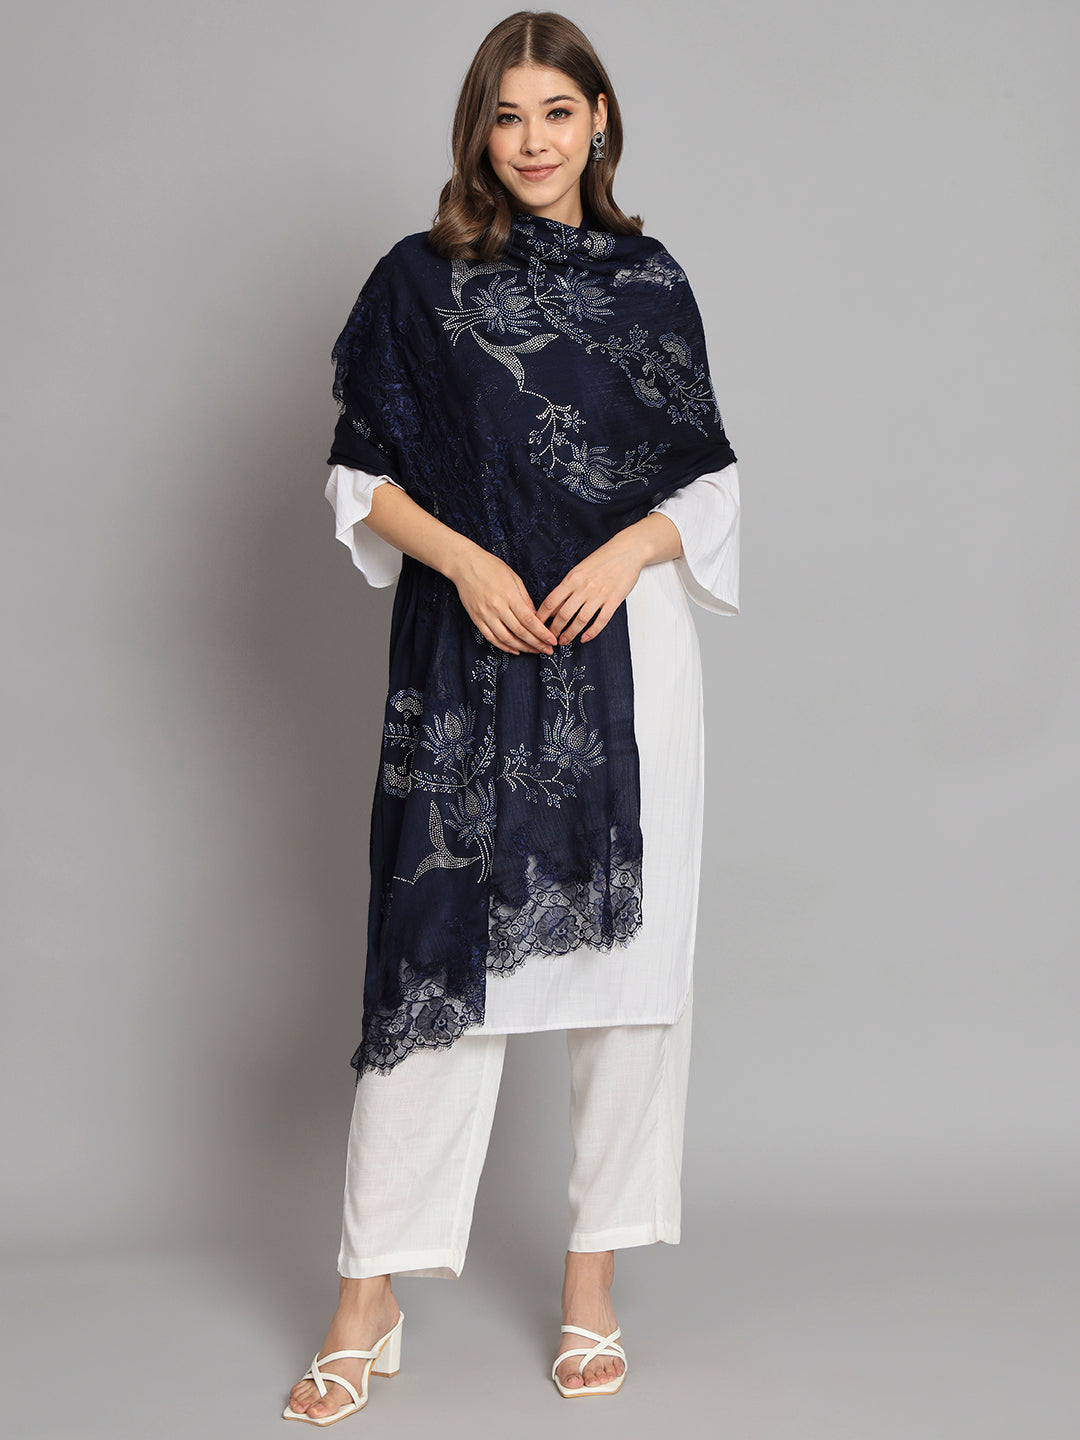 woolen shawls, cashmere shawls by modarta